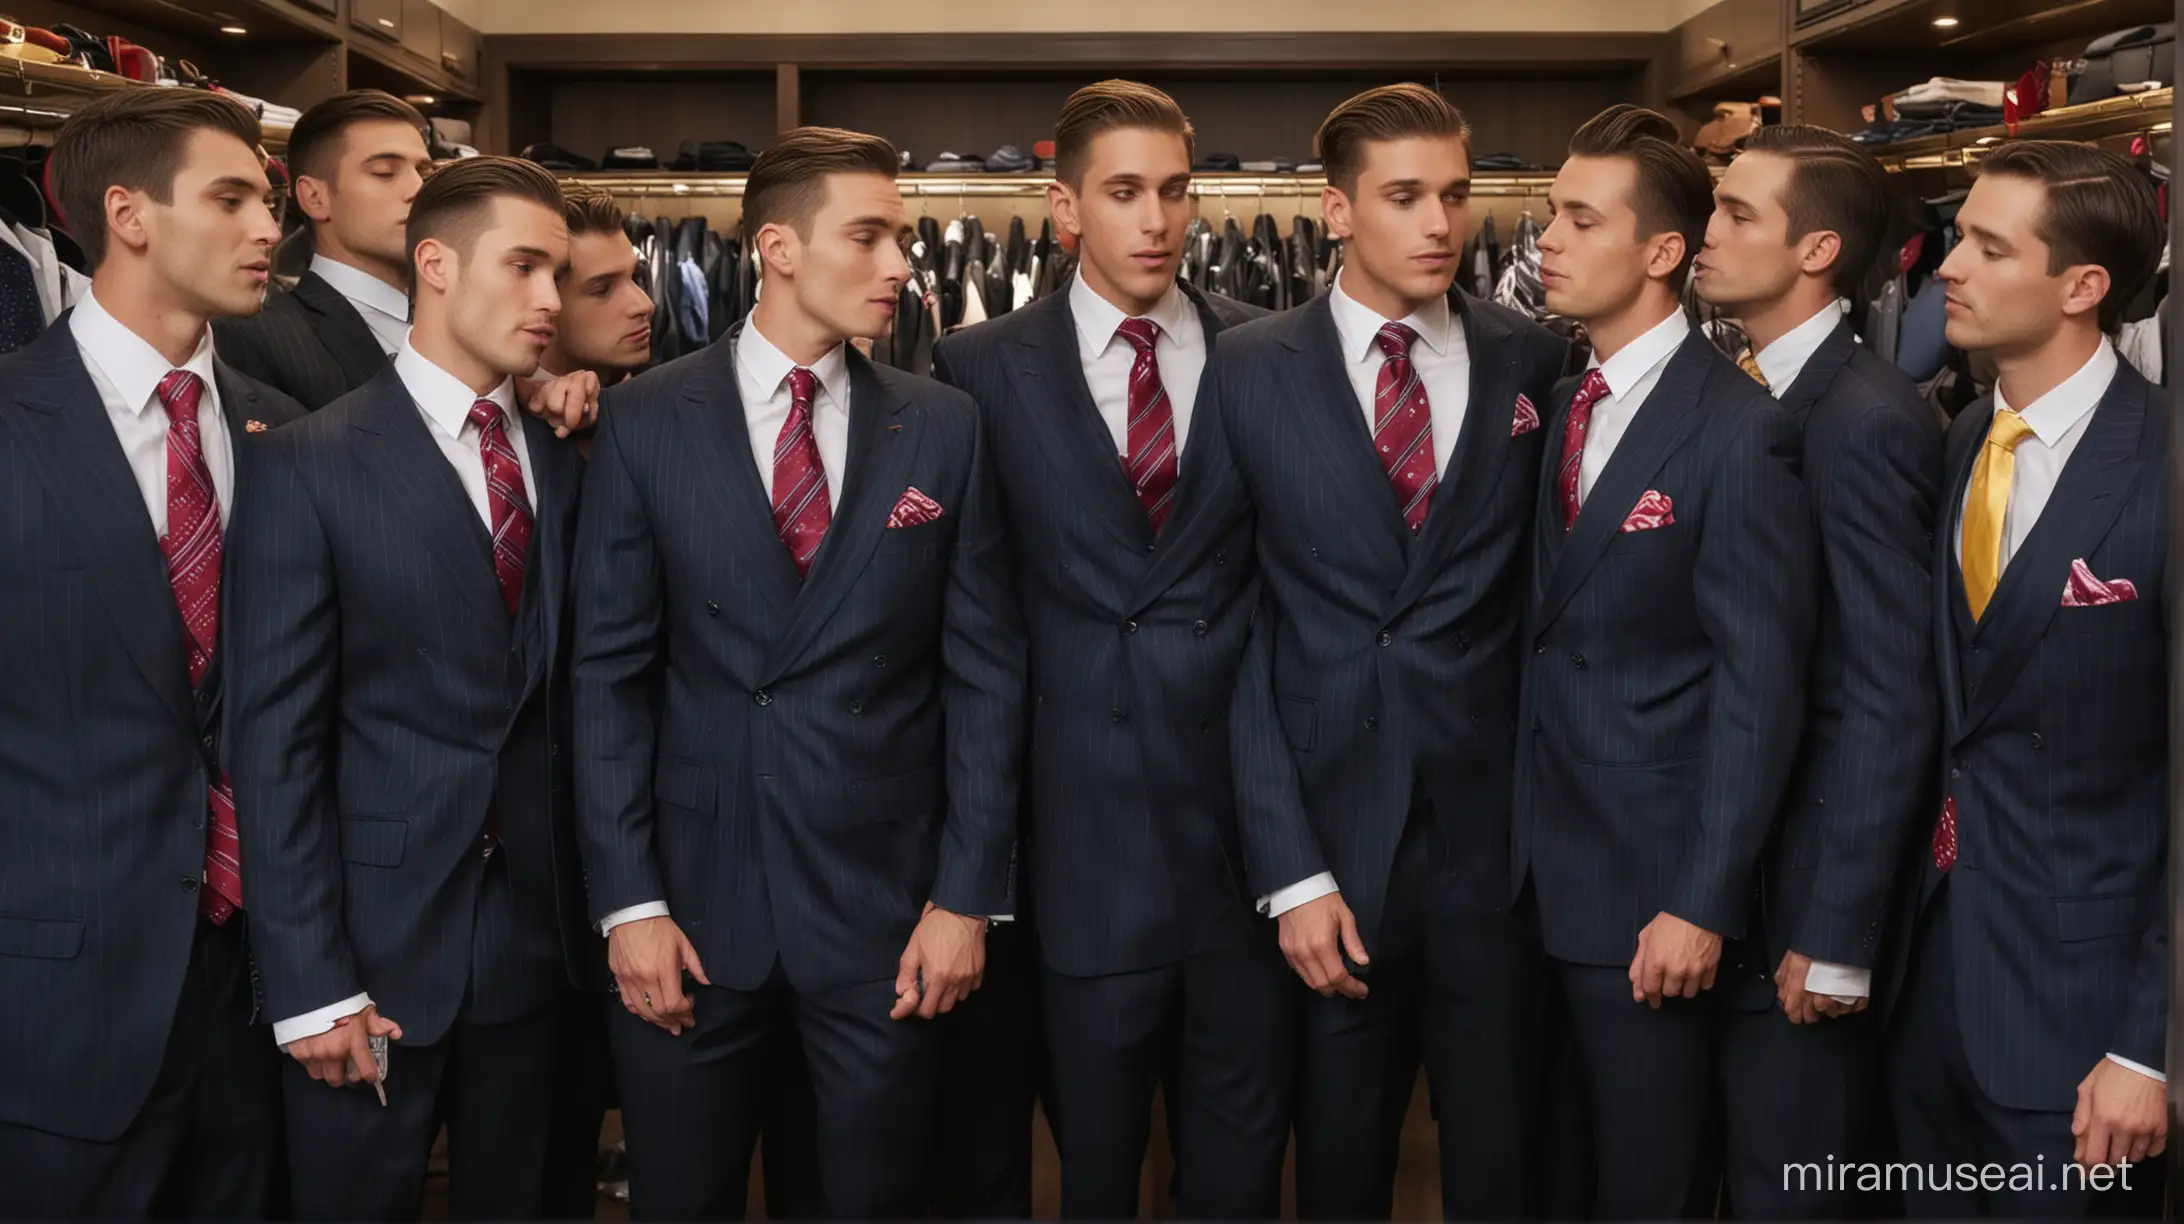 Men in Pinstripe Suits Kissing in a Gentlemens Closet